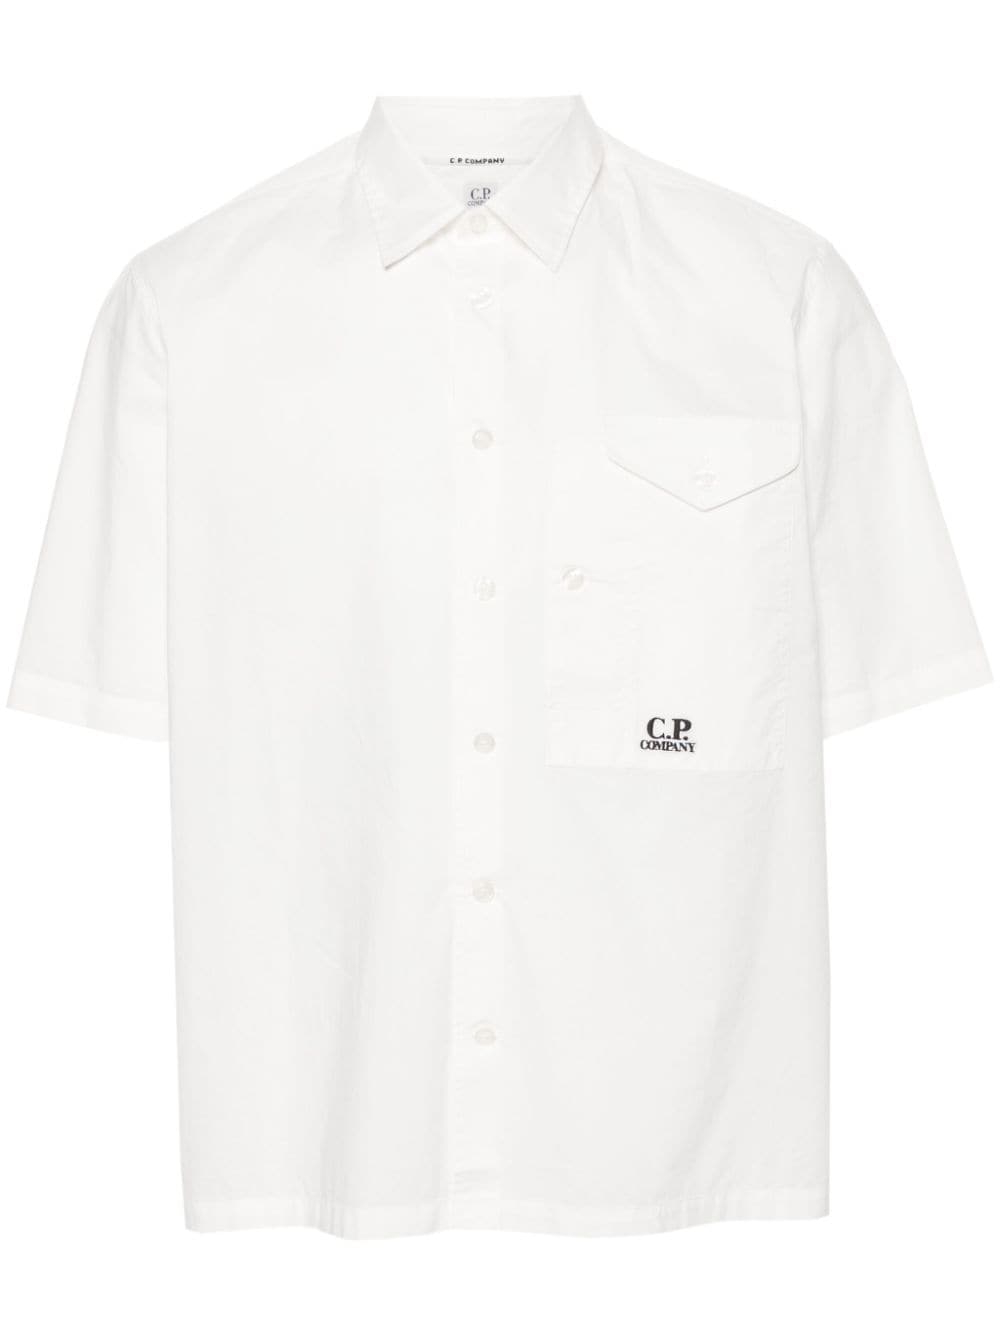 C.P. Company logo-embroidered cotton shirt - White von C.P. Company